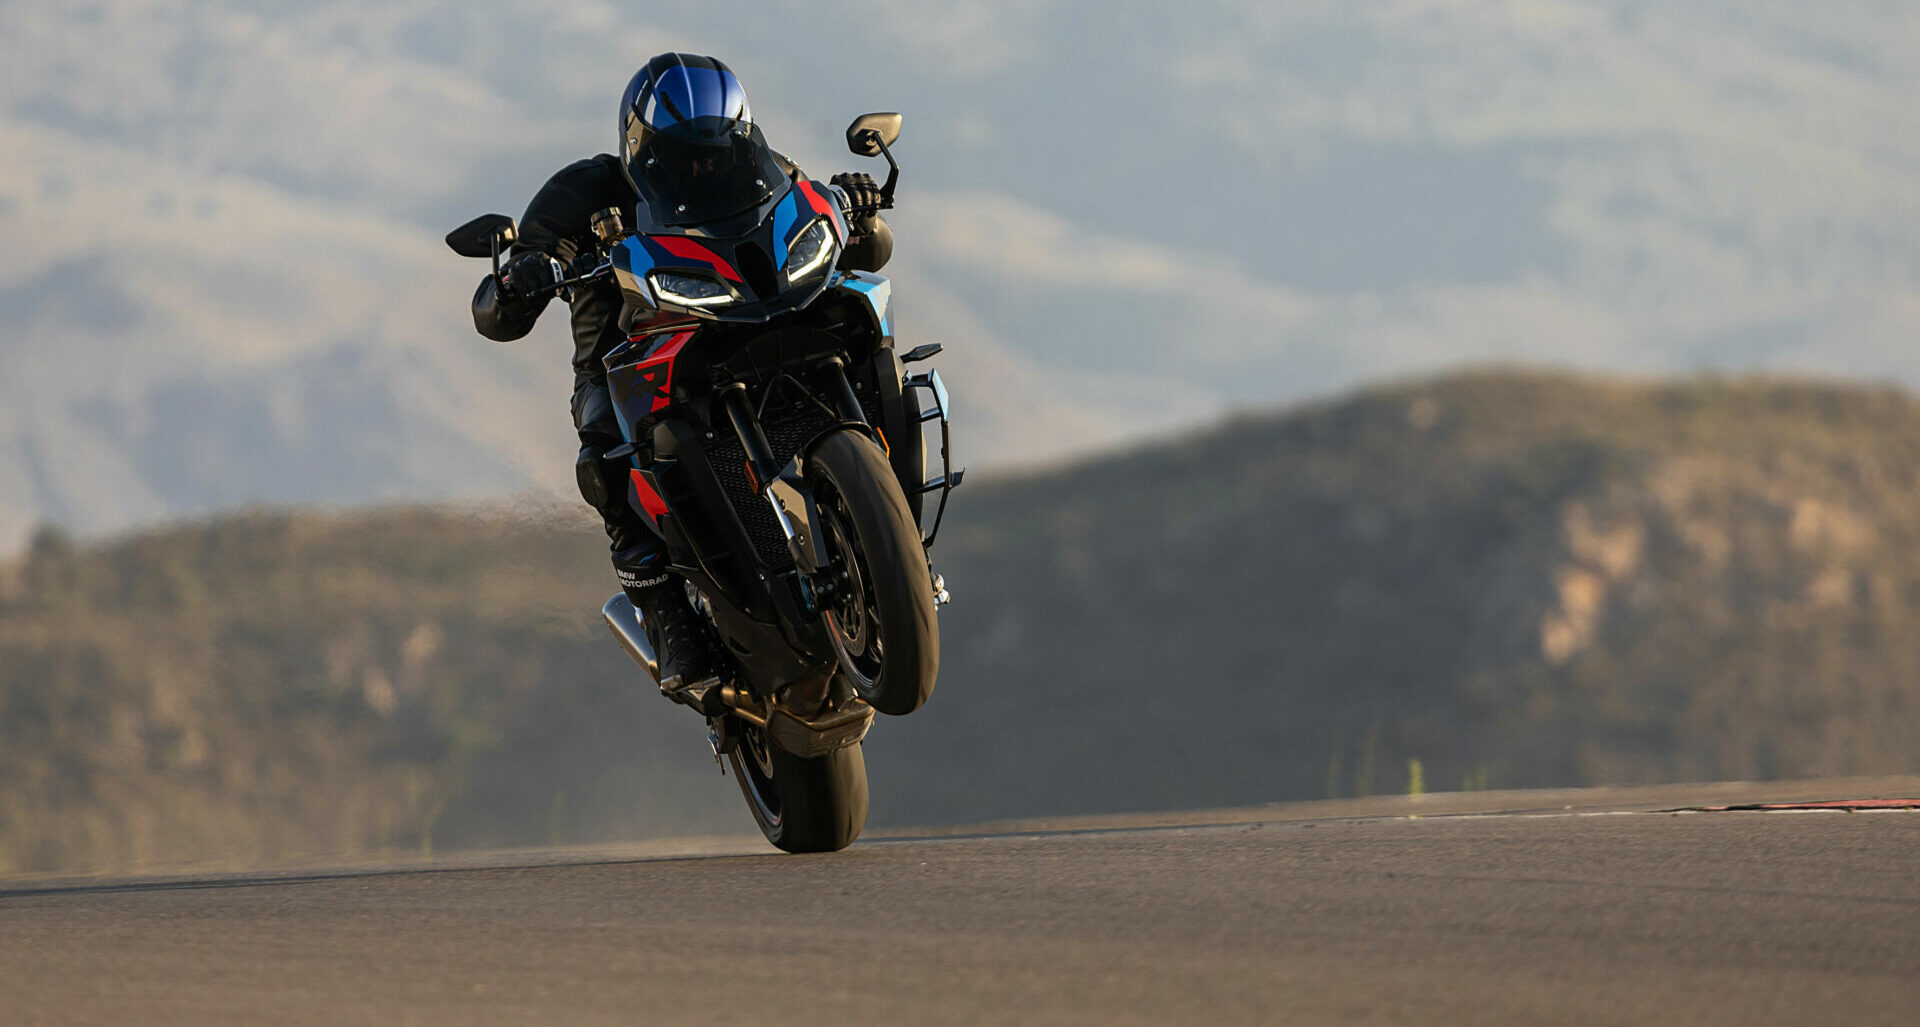 MINI-ME MOTO CAN DECAL YOUR MINIATURE BIKE - Motocross Action Magazine